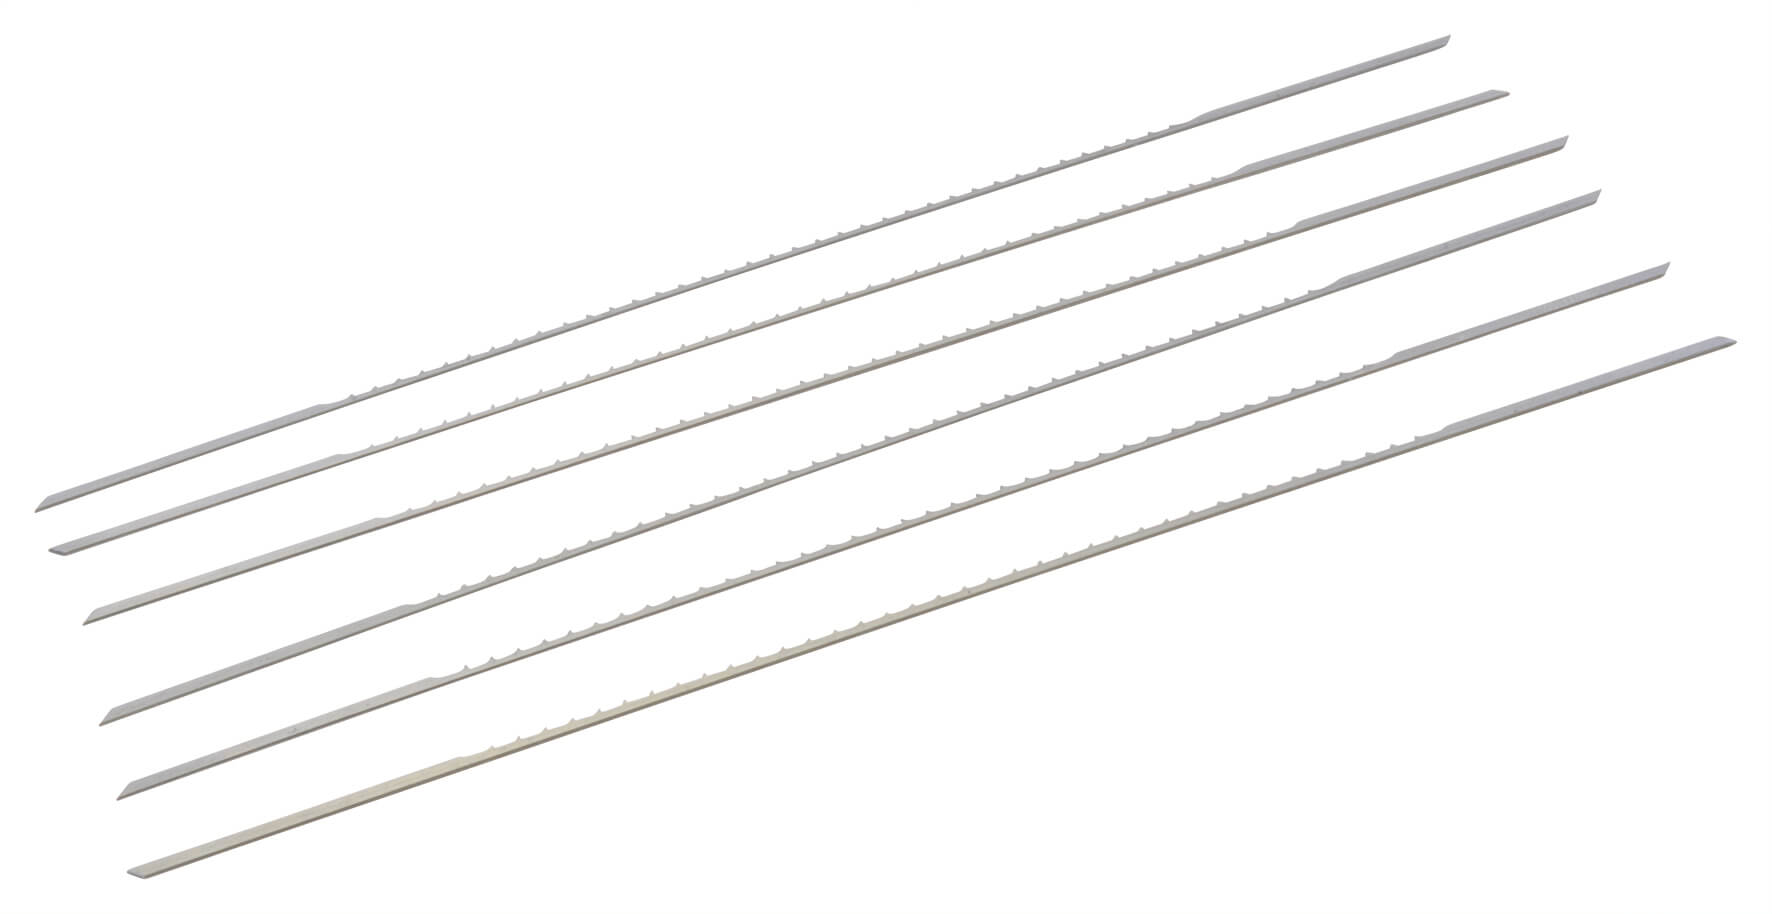 Olson Standard Fret Saw Blades - 10tpi (Pack of 6)